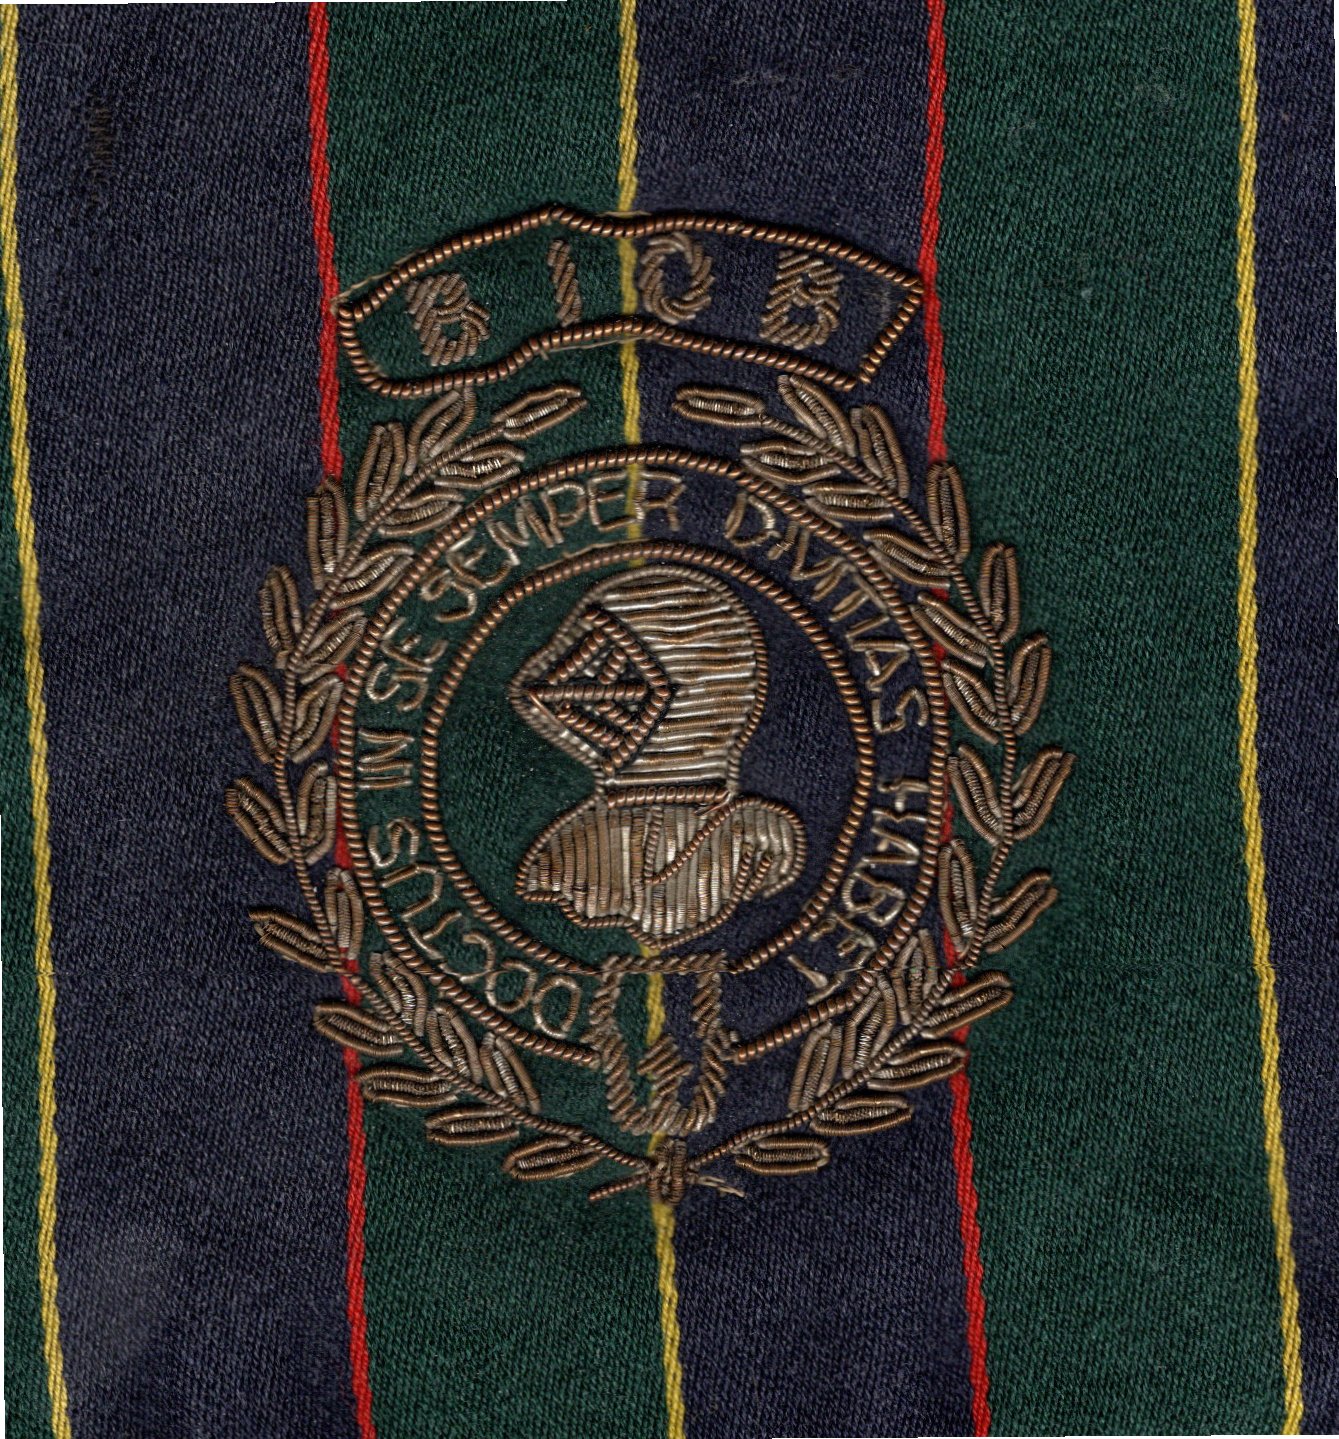 Photograph of Striped Blazer Badge